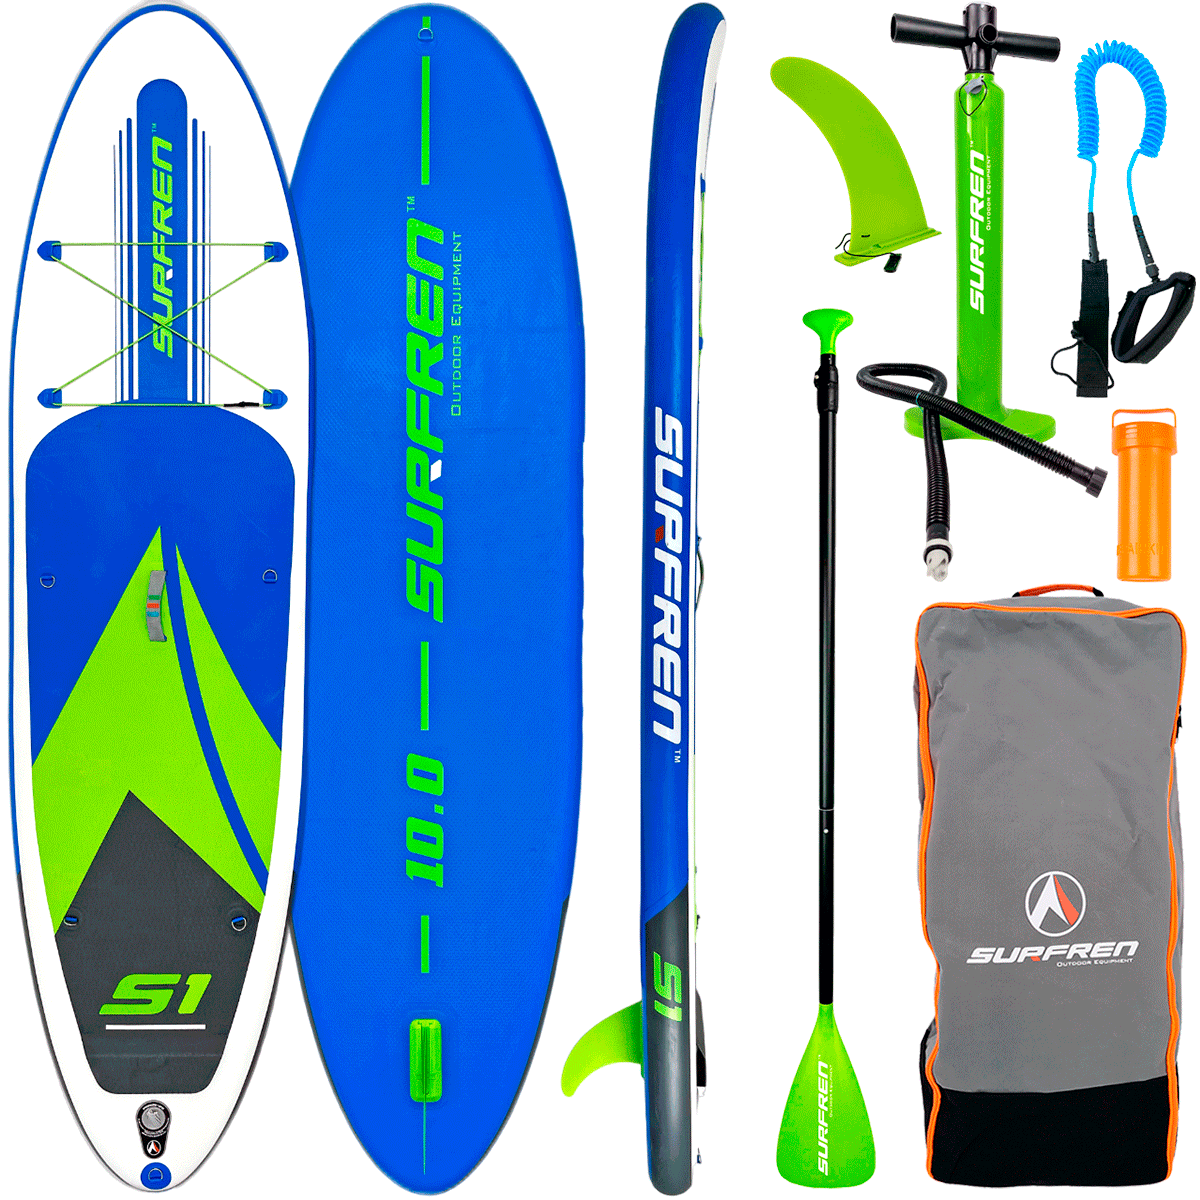 Tabla Paddle Surf Hinchable Surfren S1 10'0" - azul-verde - 